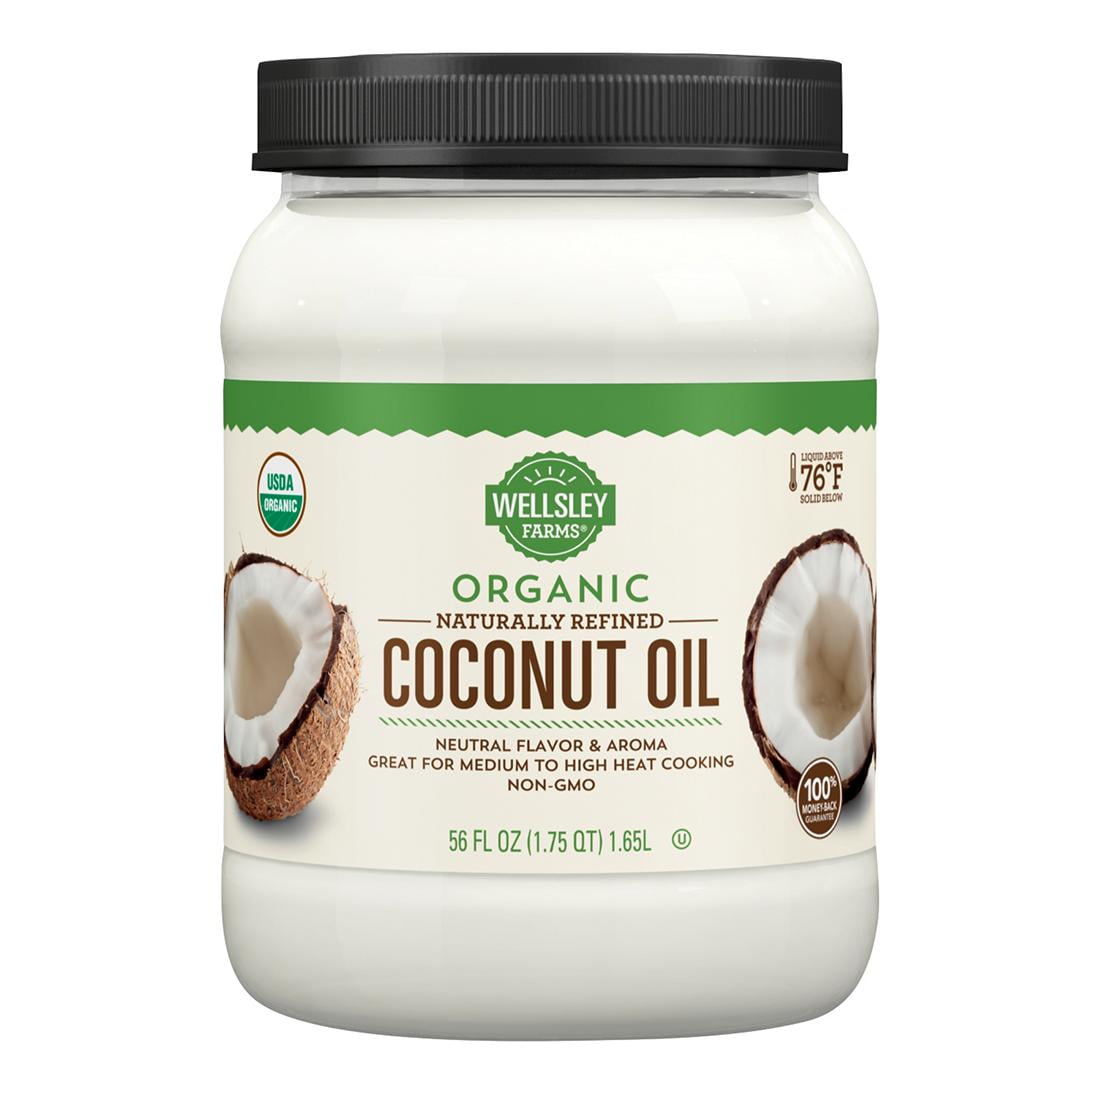 Wellsley Farms Organic Naturally Refined Coconut Oil, 56 oz. - Walmart.com